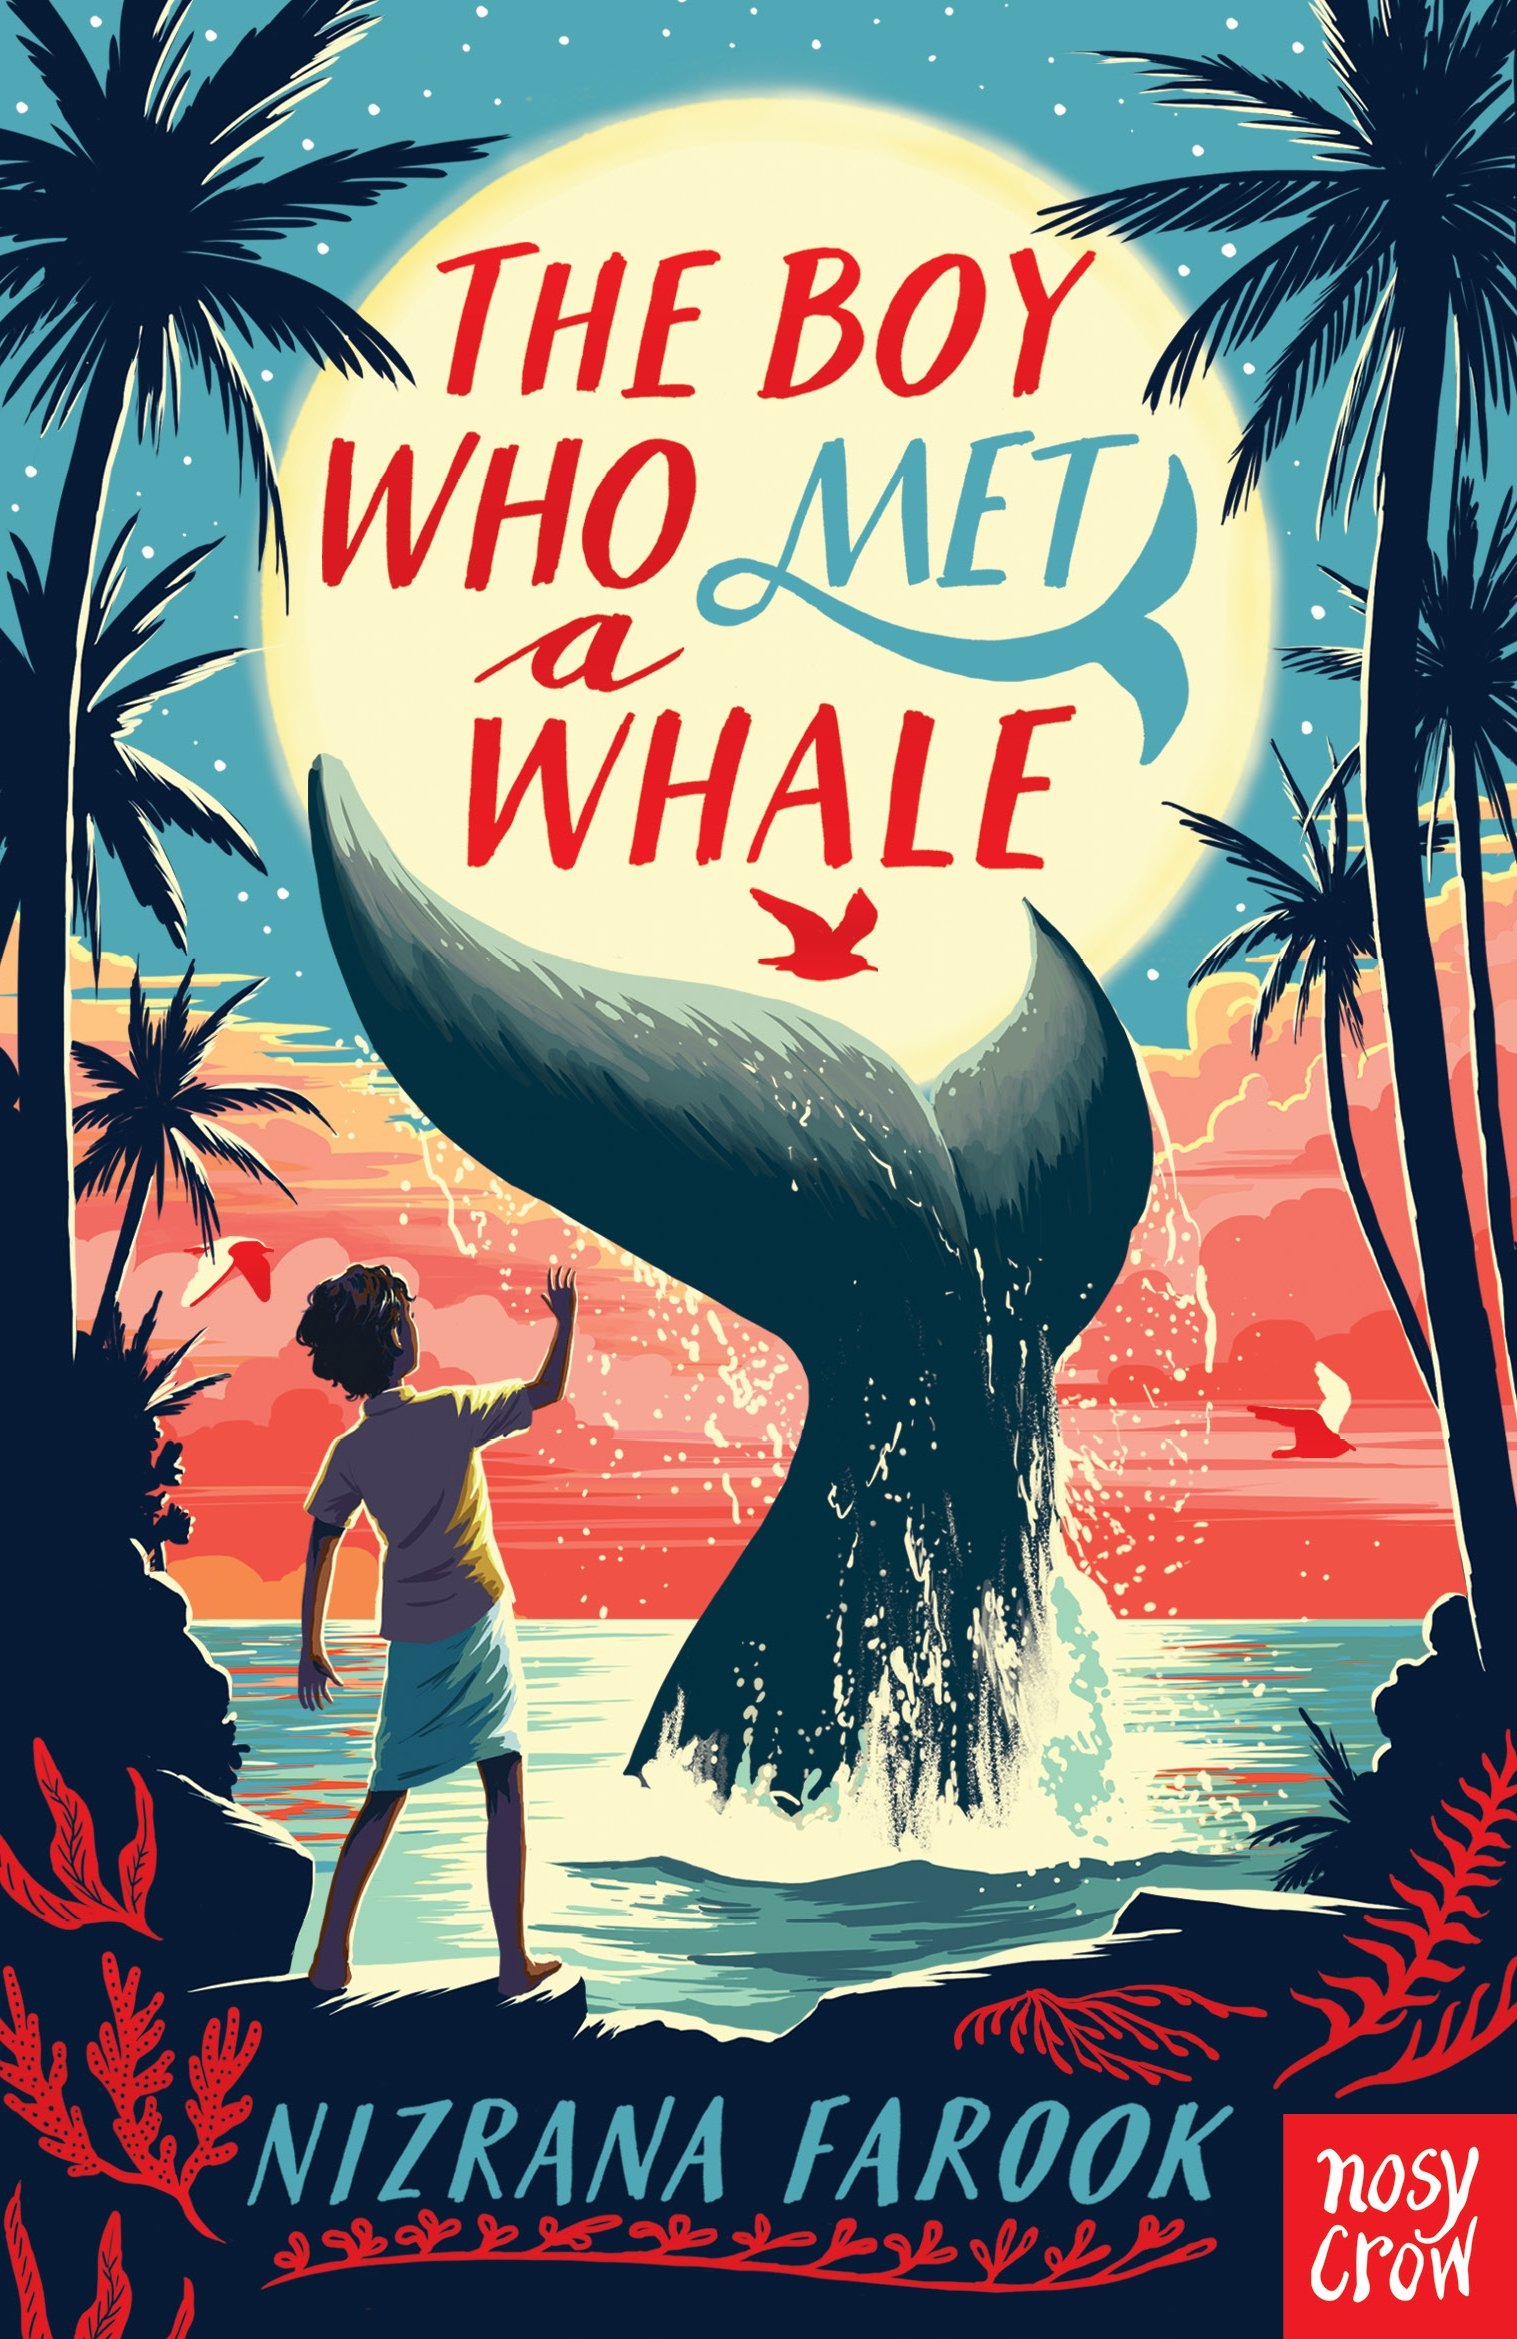 The Boy Who Met A Whale by Nizrana Farook